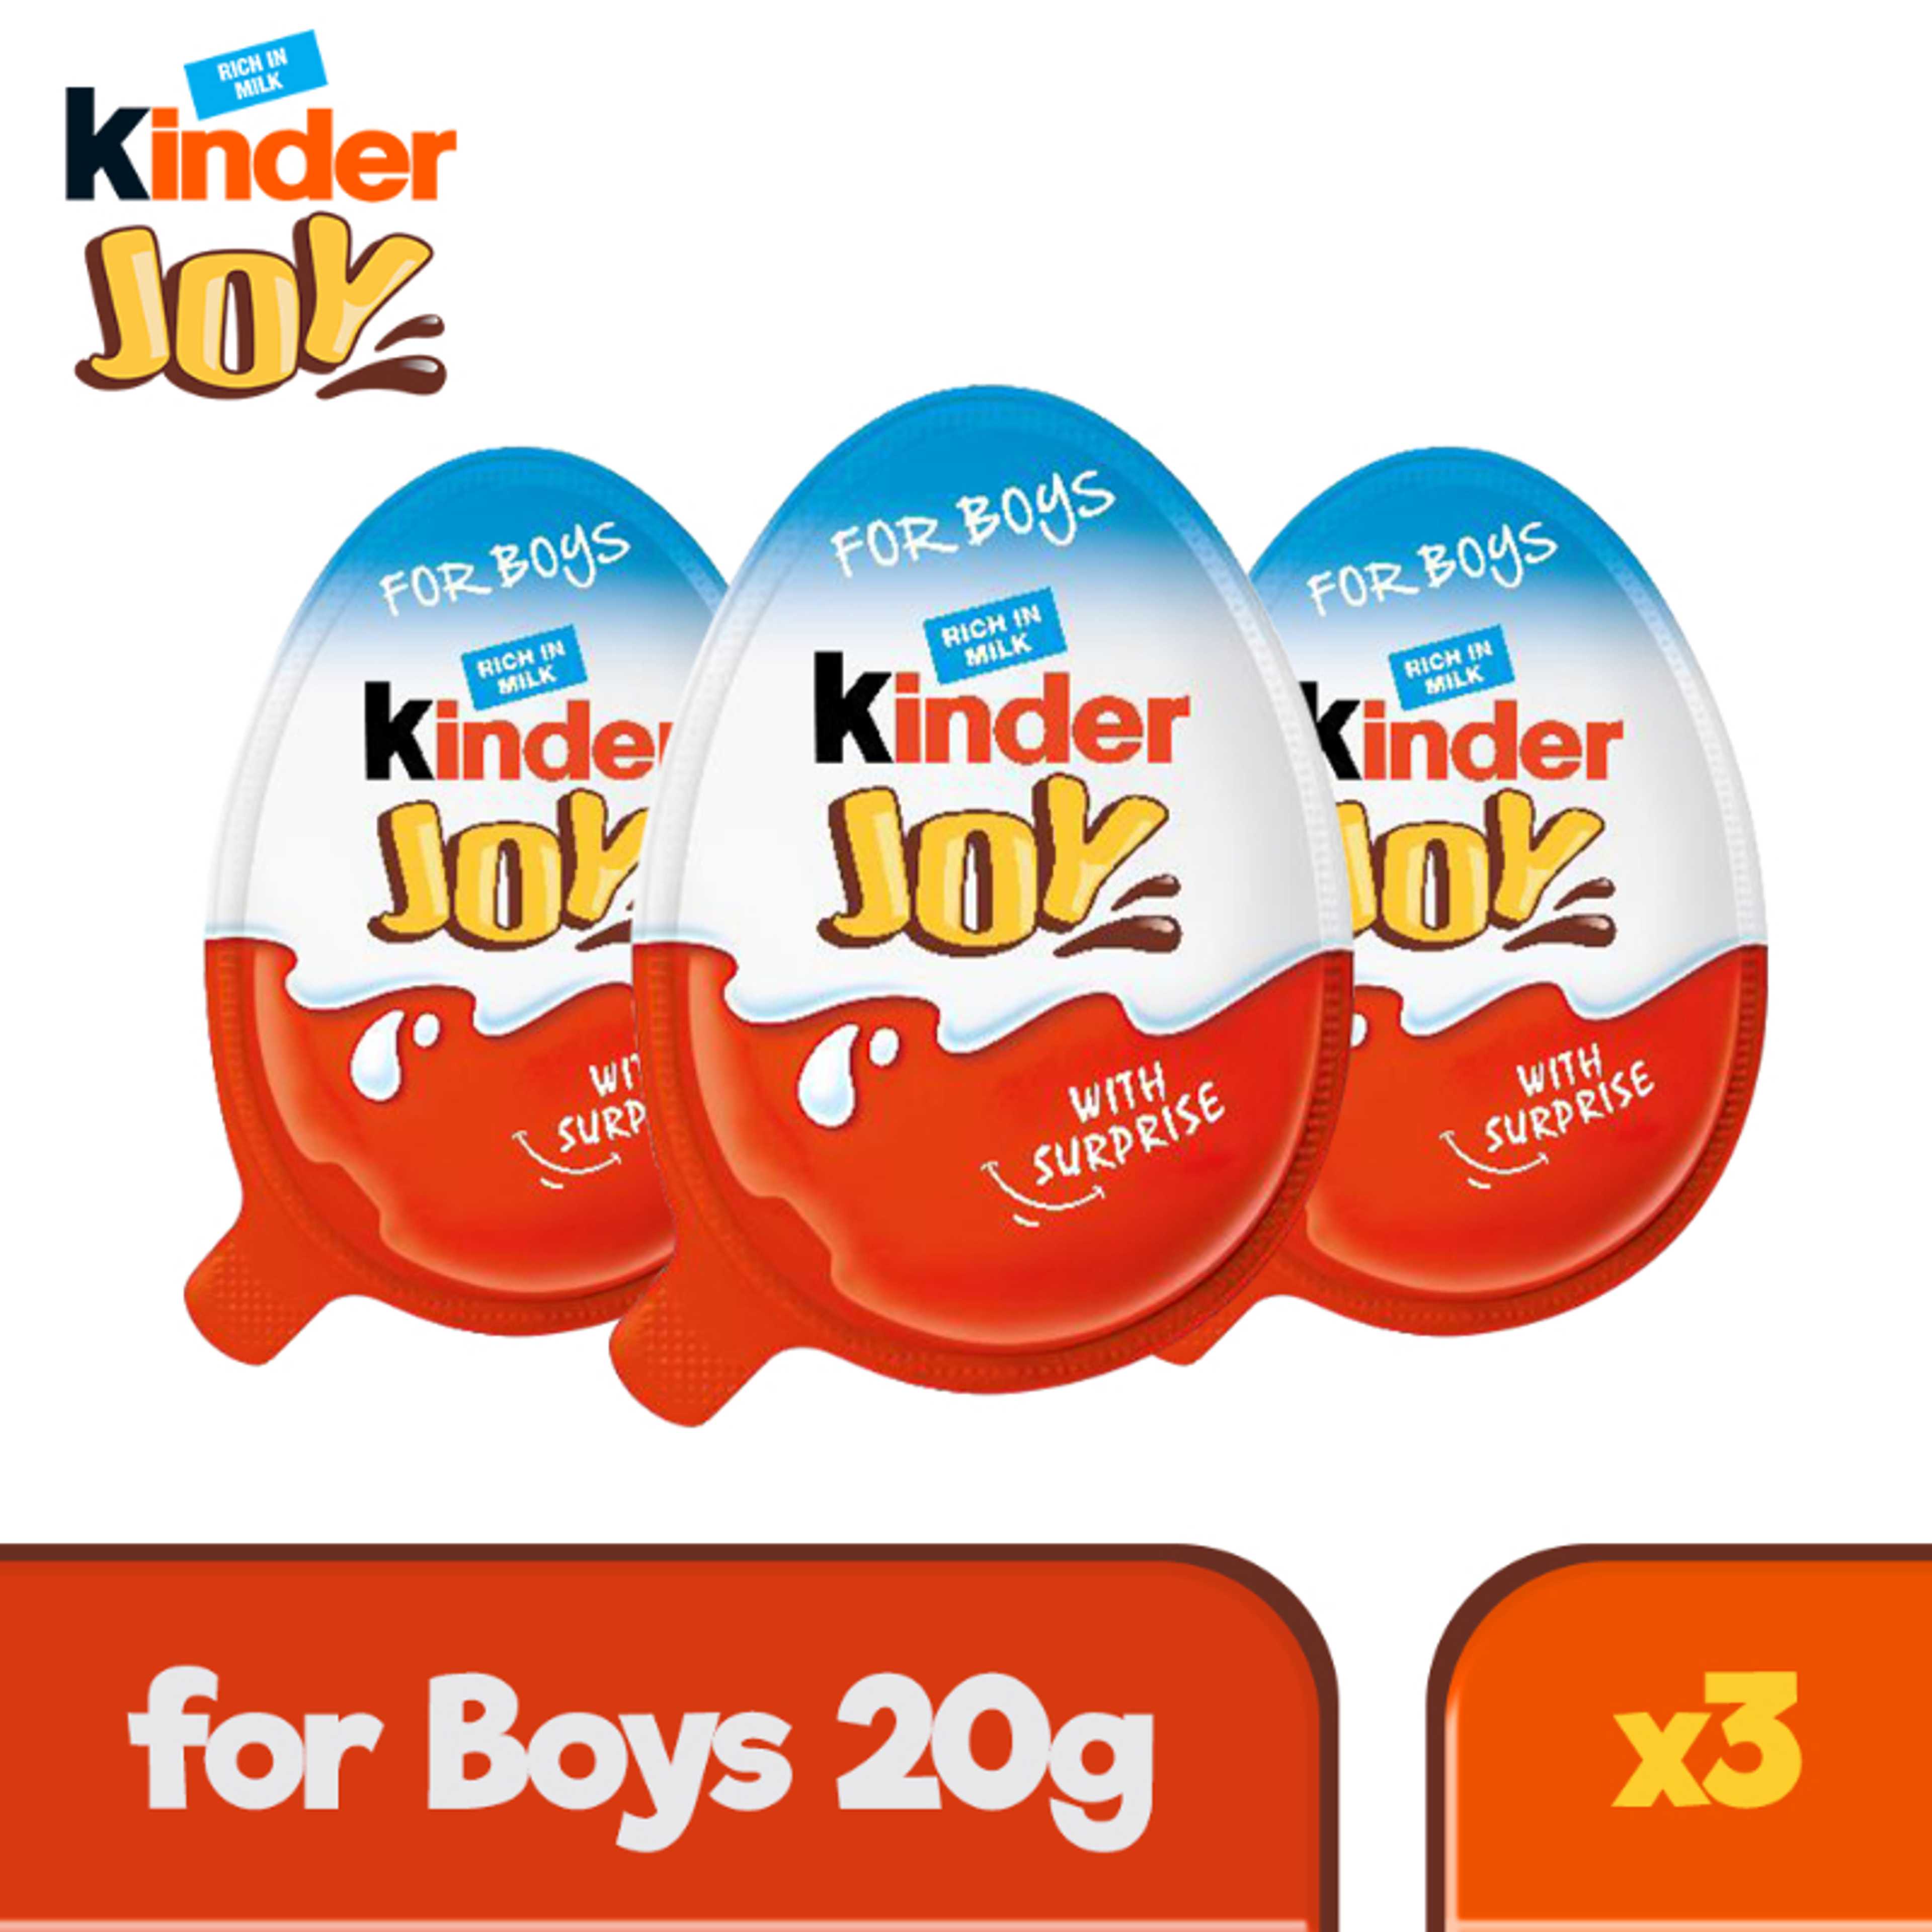 Kinder Joy, Chocolate Egg, Boys 20gm (Pack of 3)